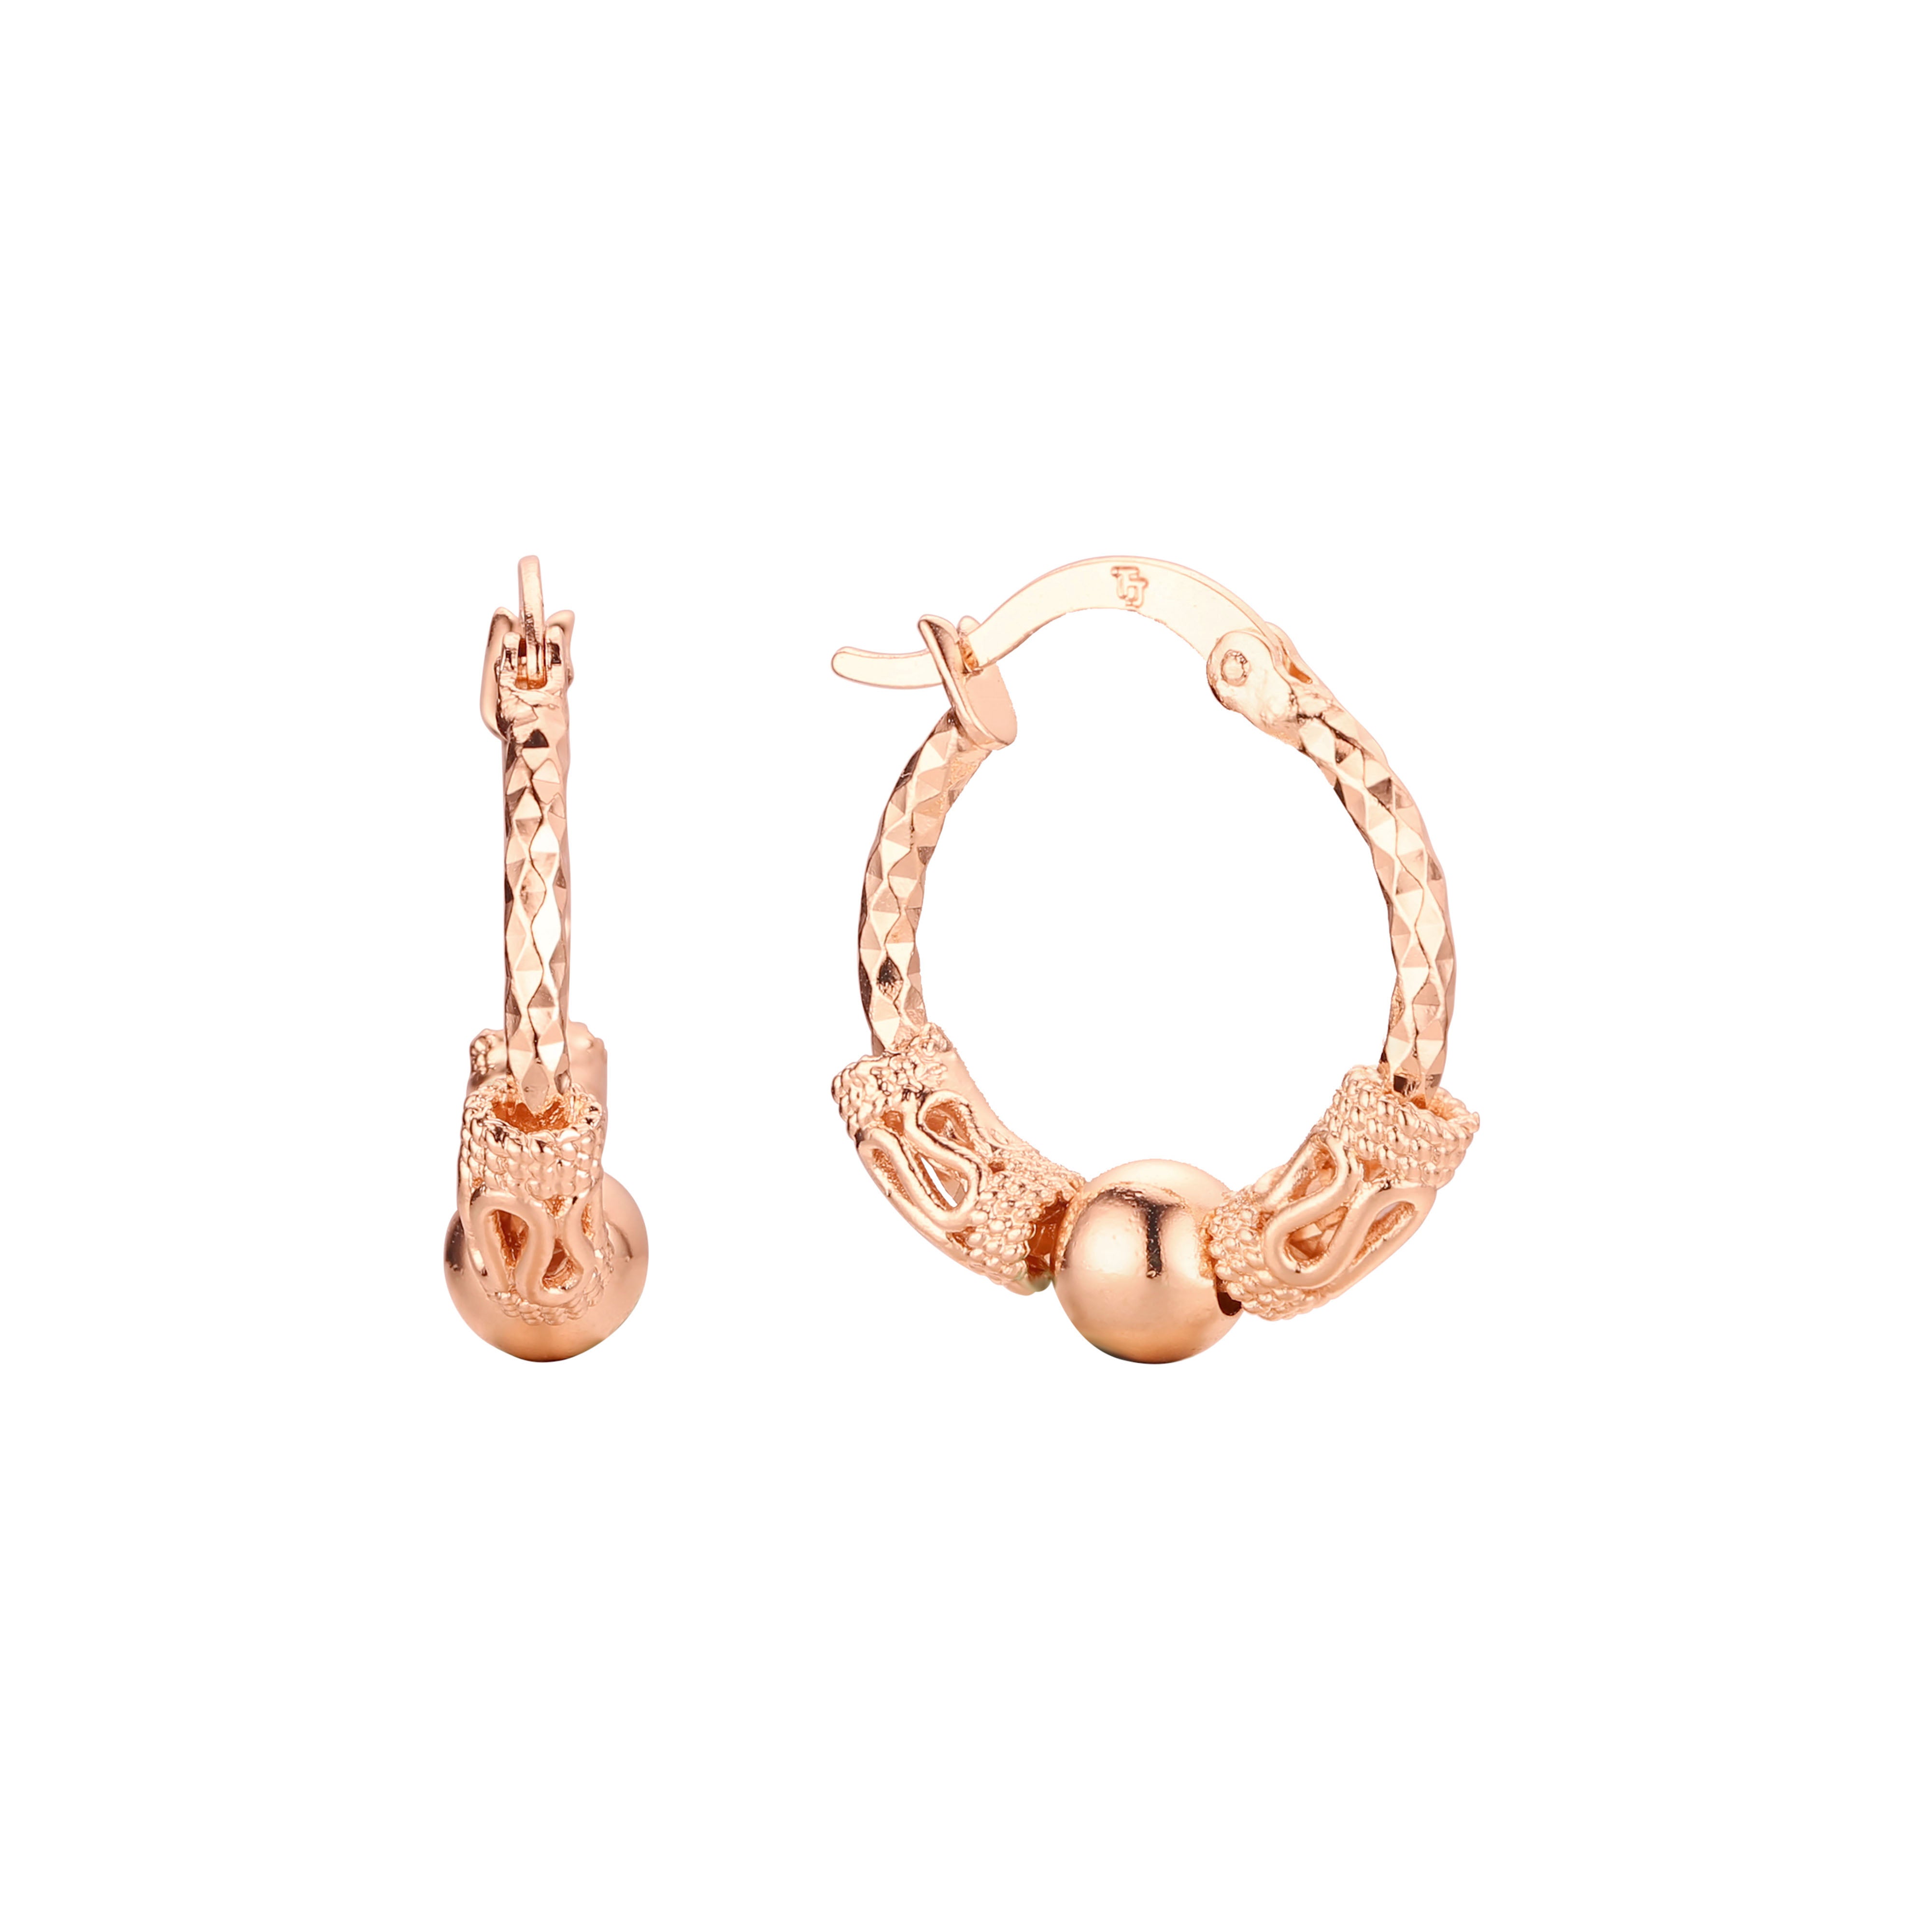 Hoop earrings in 14K Gold, Rose Gold, two tone plating colors